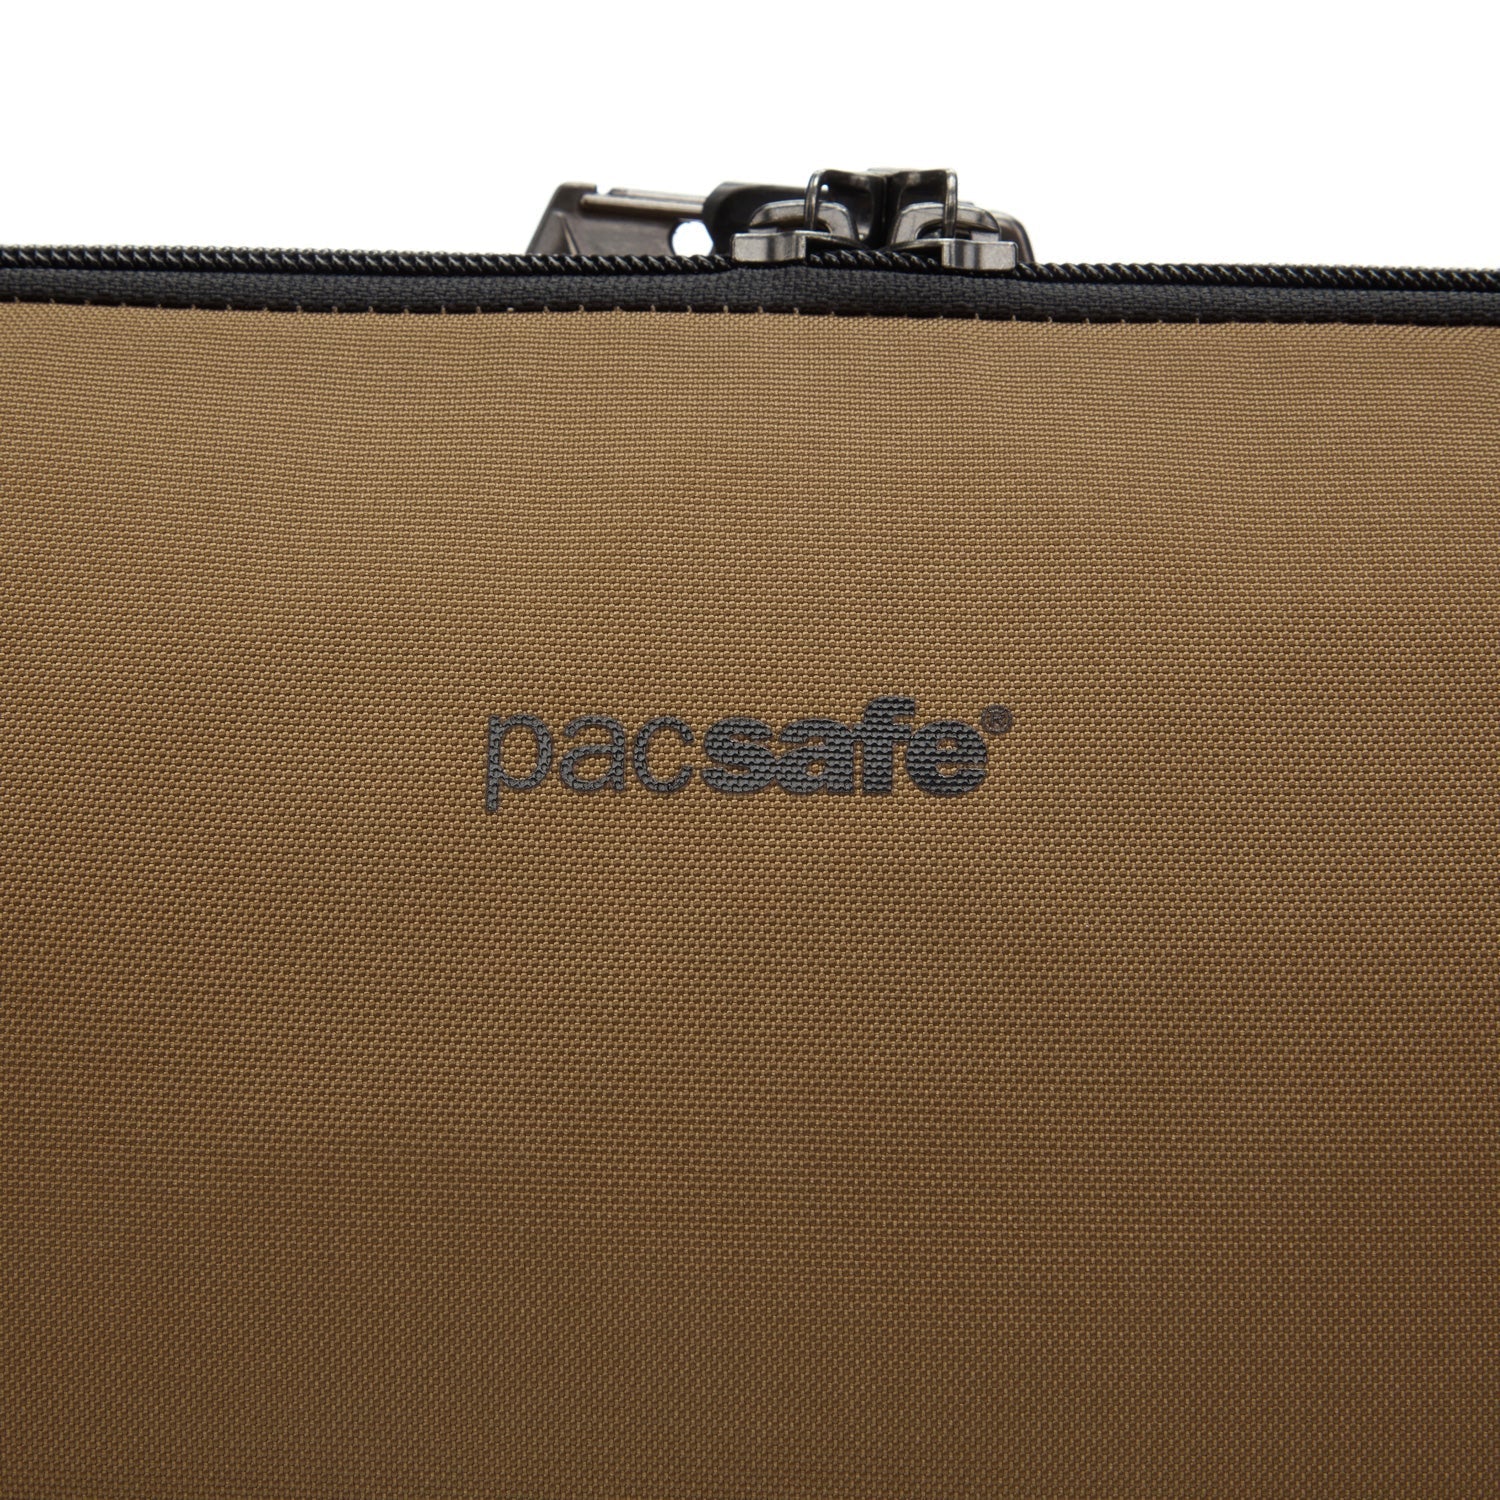 Pacsafe® X anti-theft urban sling